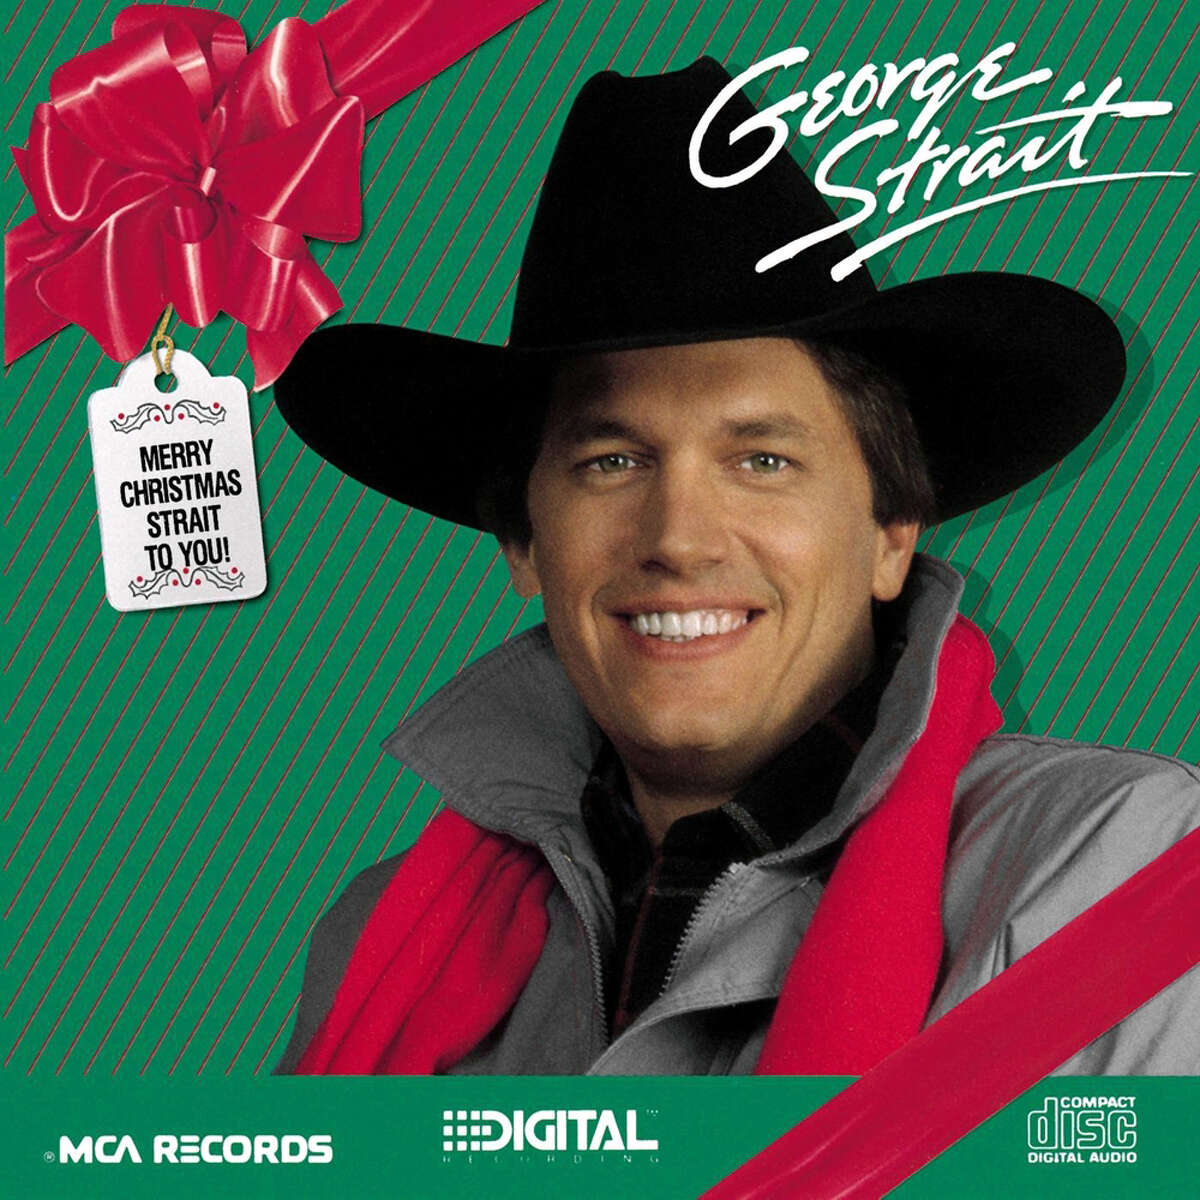 The George Strait Christmas Album. 